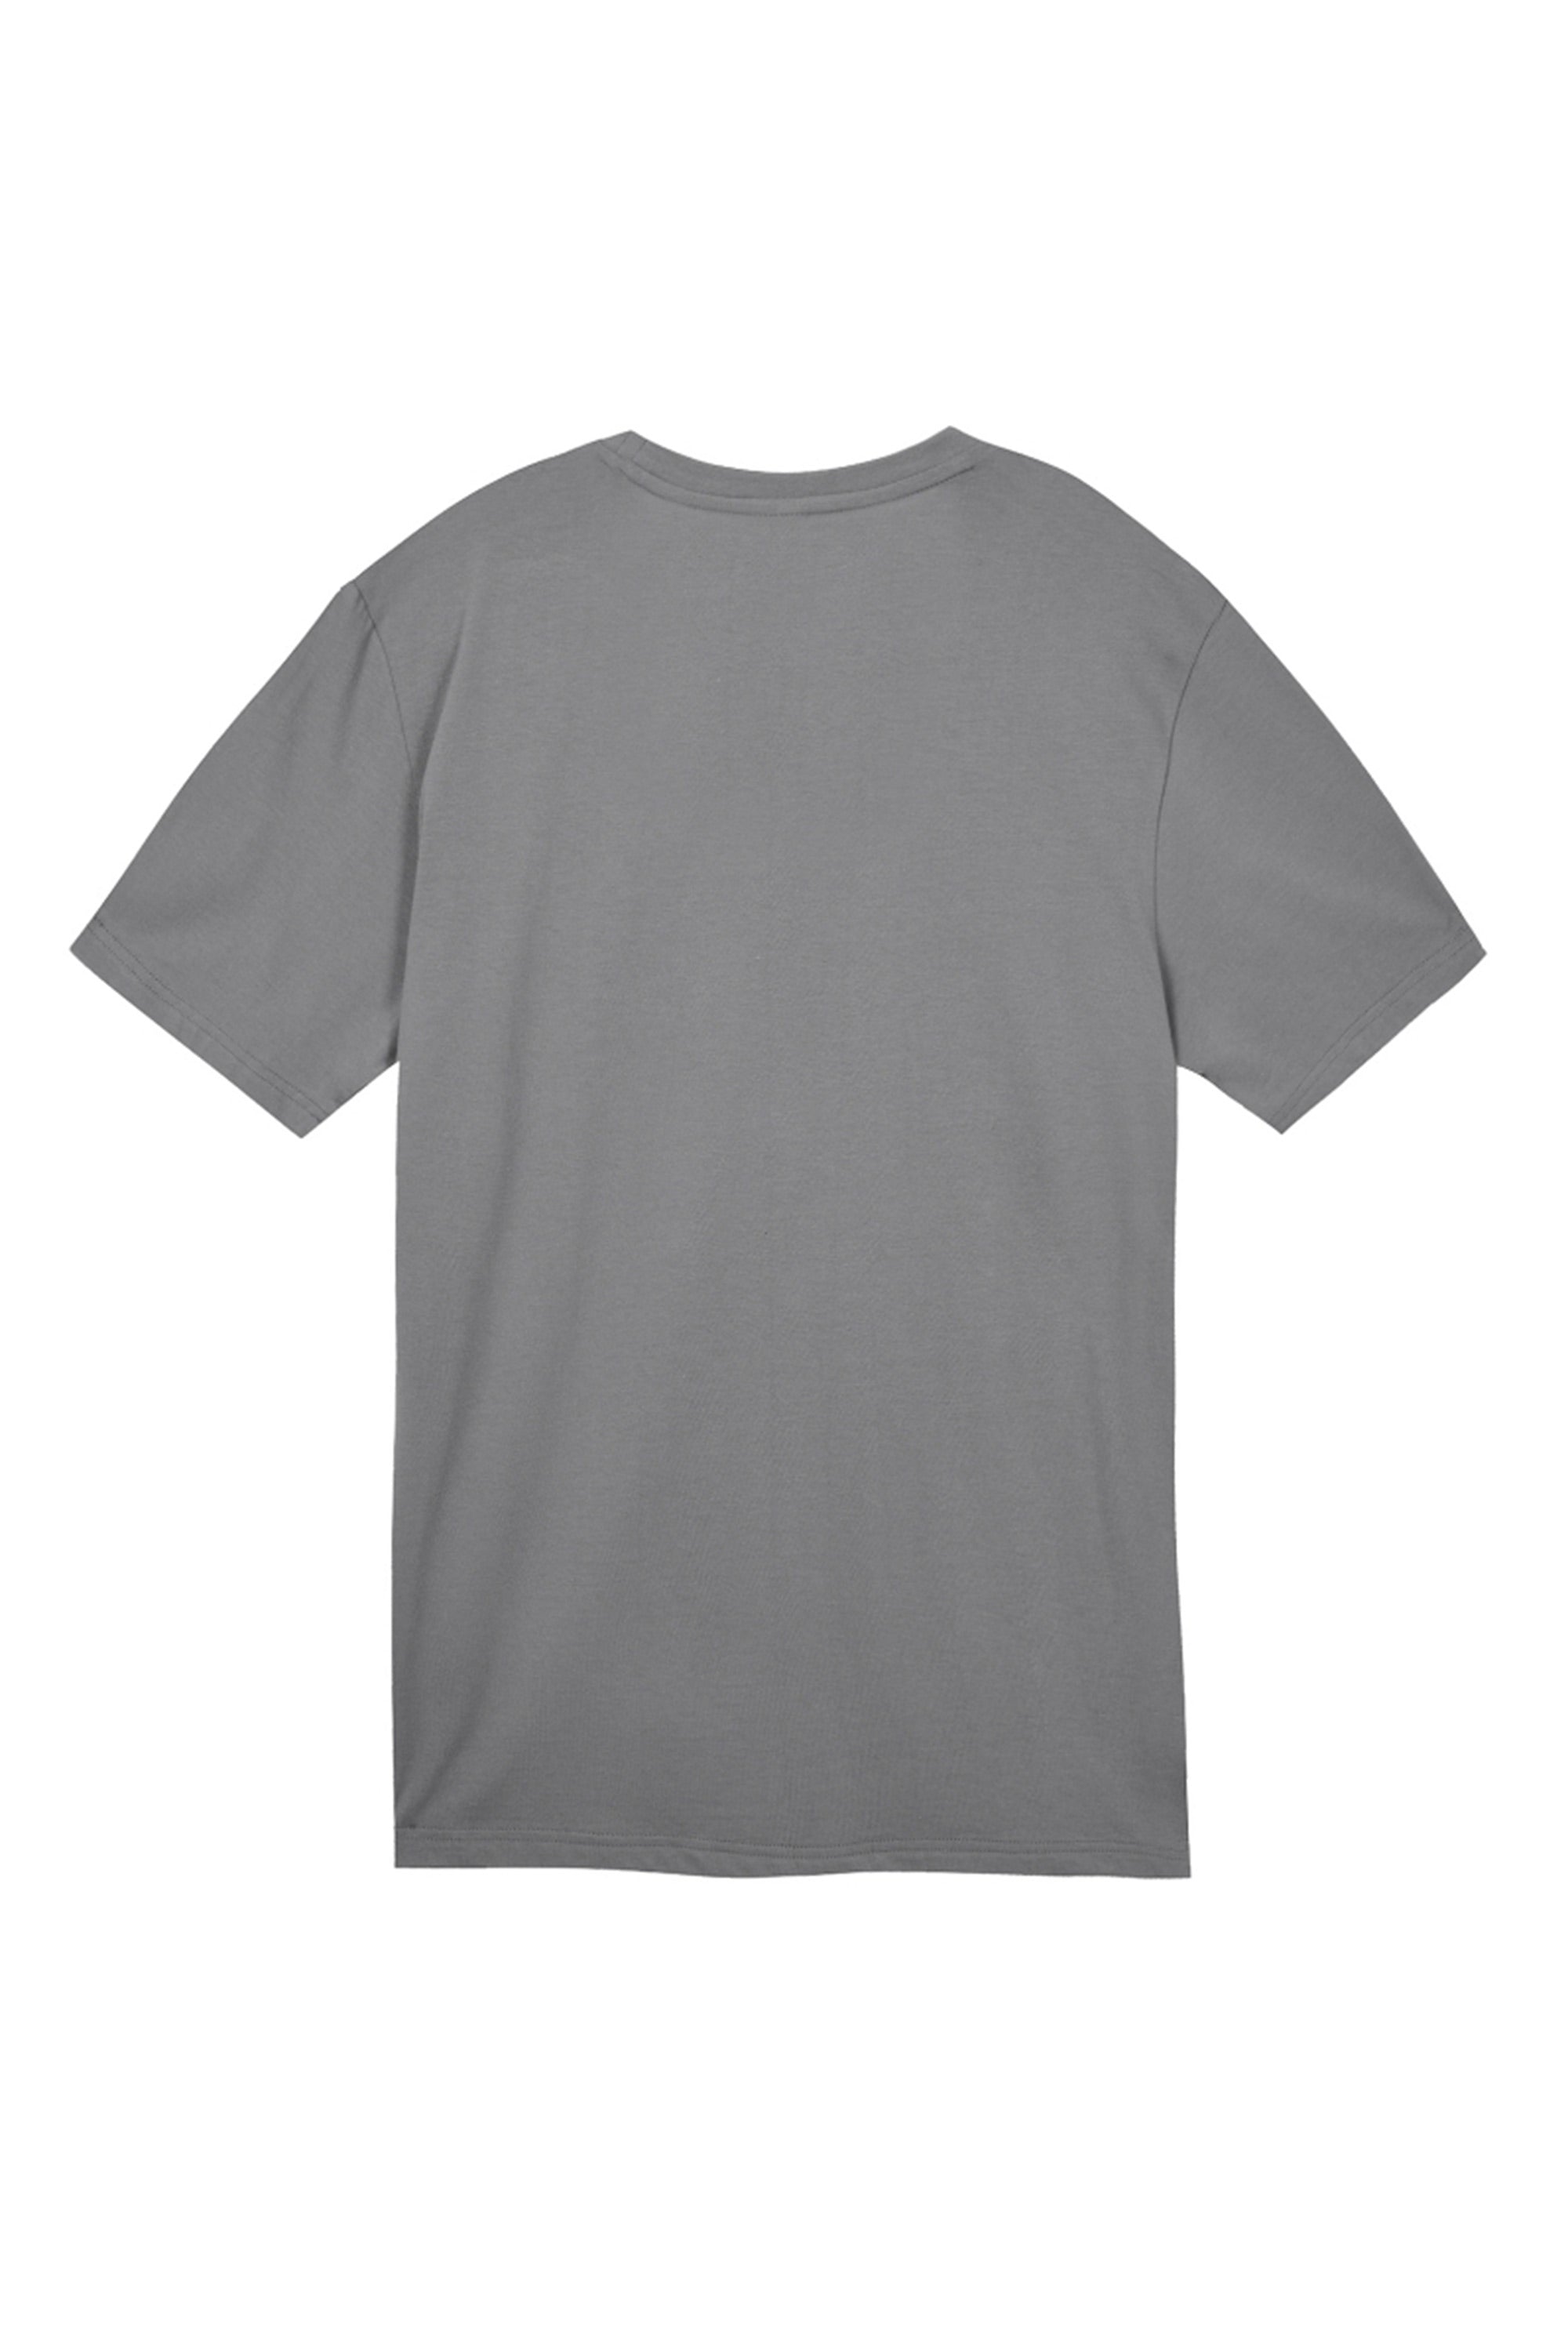 Portland Short-Sleeve T-Shirt